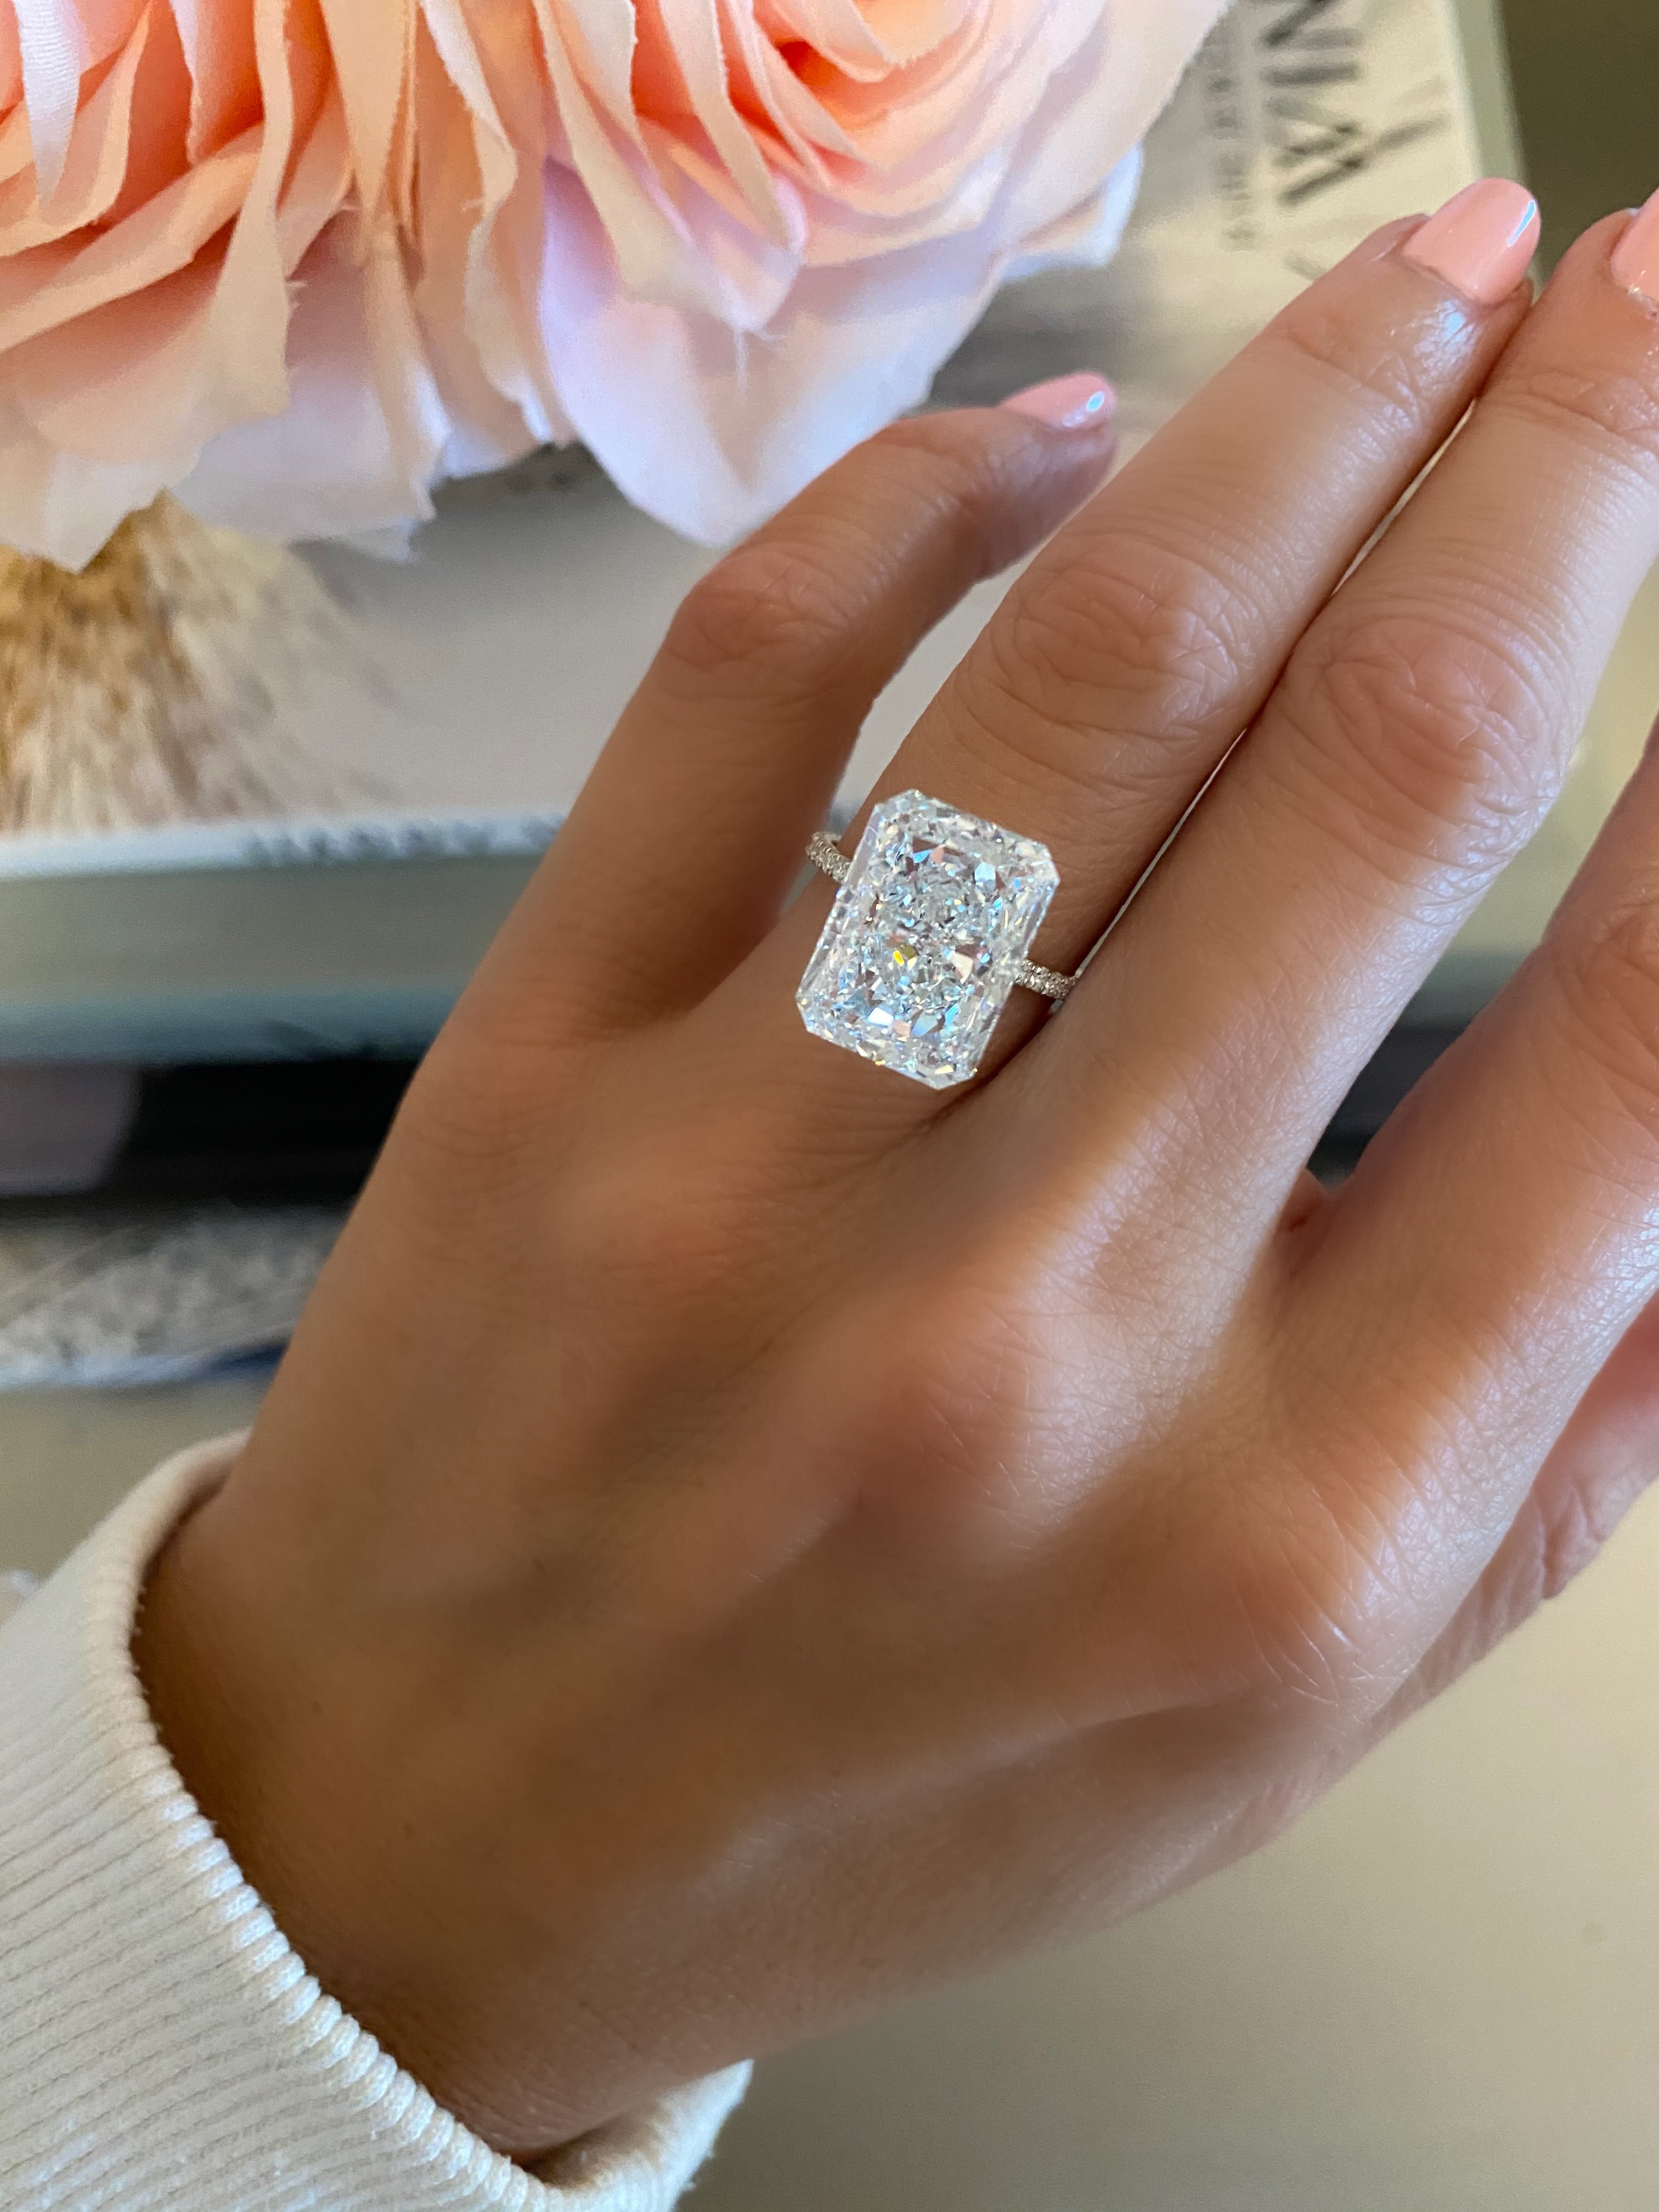 Neil Lane Diamond Engagement Ring 2-5/8 ct tw Princess/Round 14K White Gold  | Kay Outlet